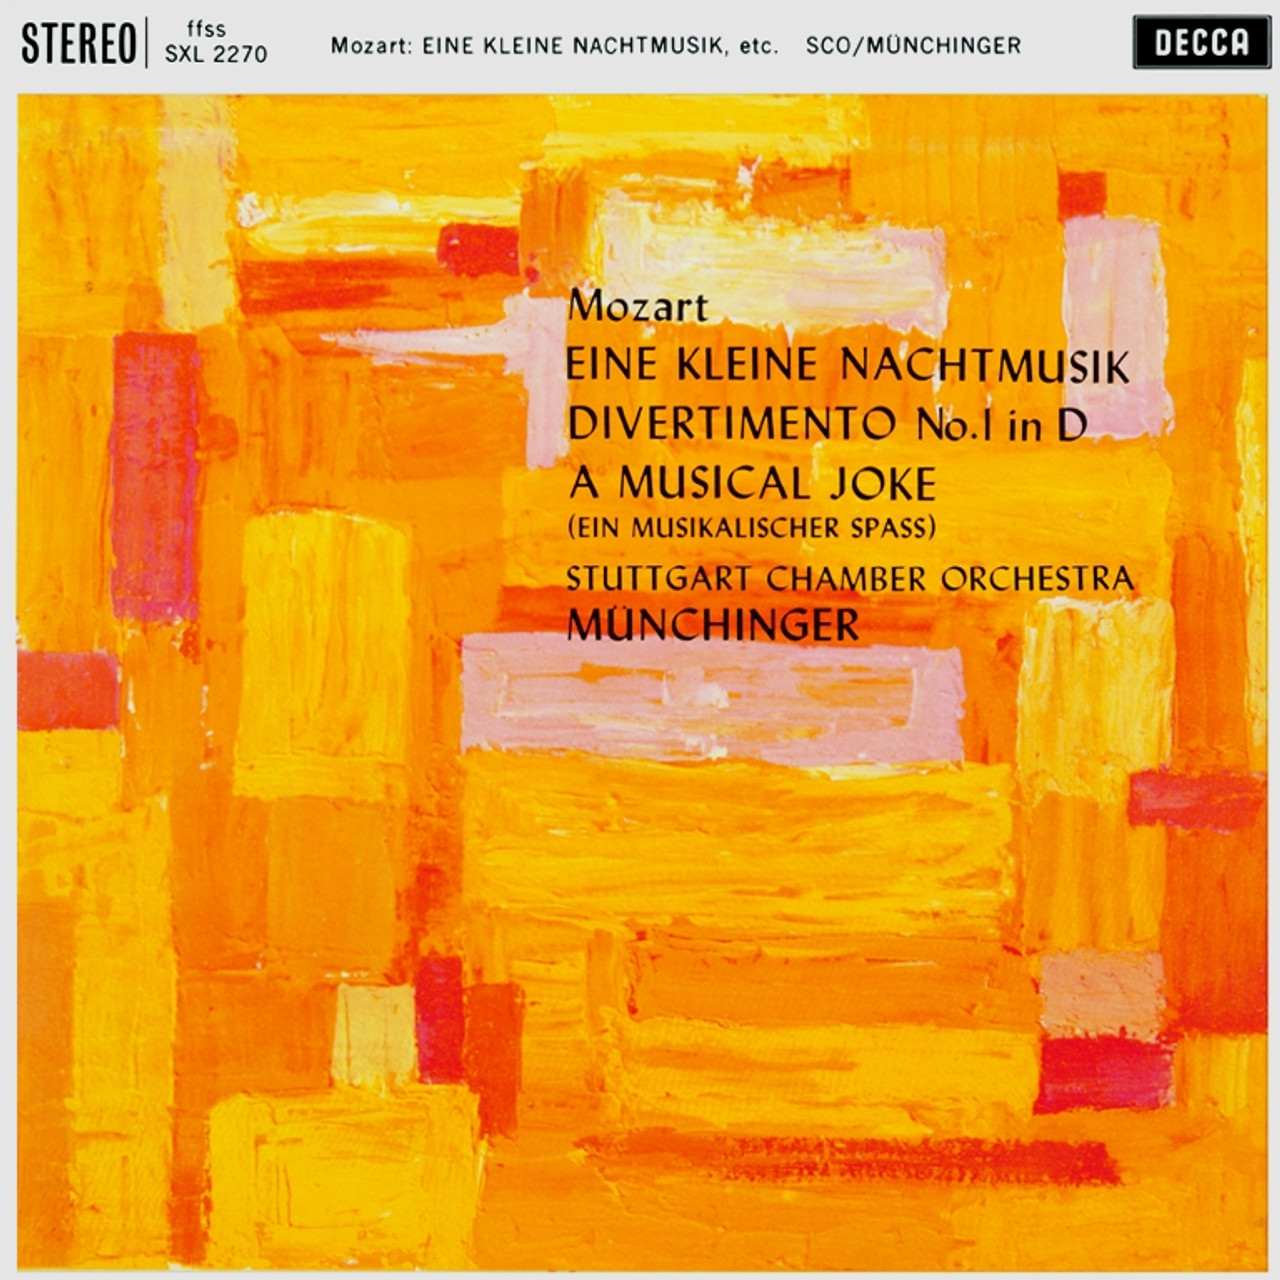 Classical Vinyl | Amadeus Mozart: Eine Kleine Nachtmusik, Divertimento No.1 D, A Musical Joke, Karl Münchinger/Stuttgart Chamber Orchestra - LP 180g, Speakers Records 2270, EAN 4260019710291